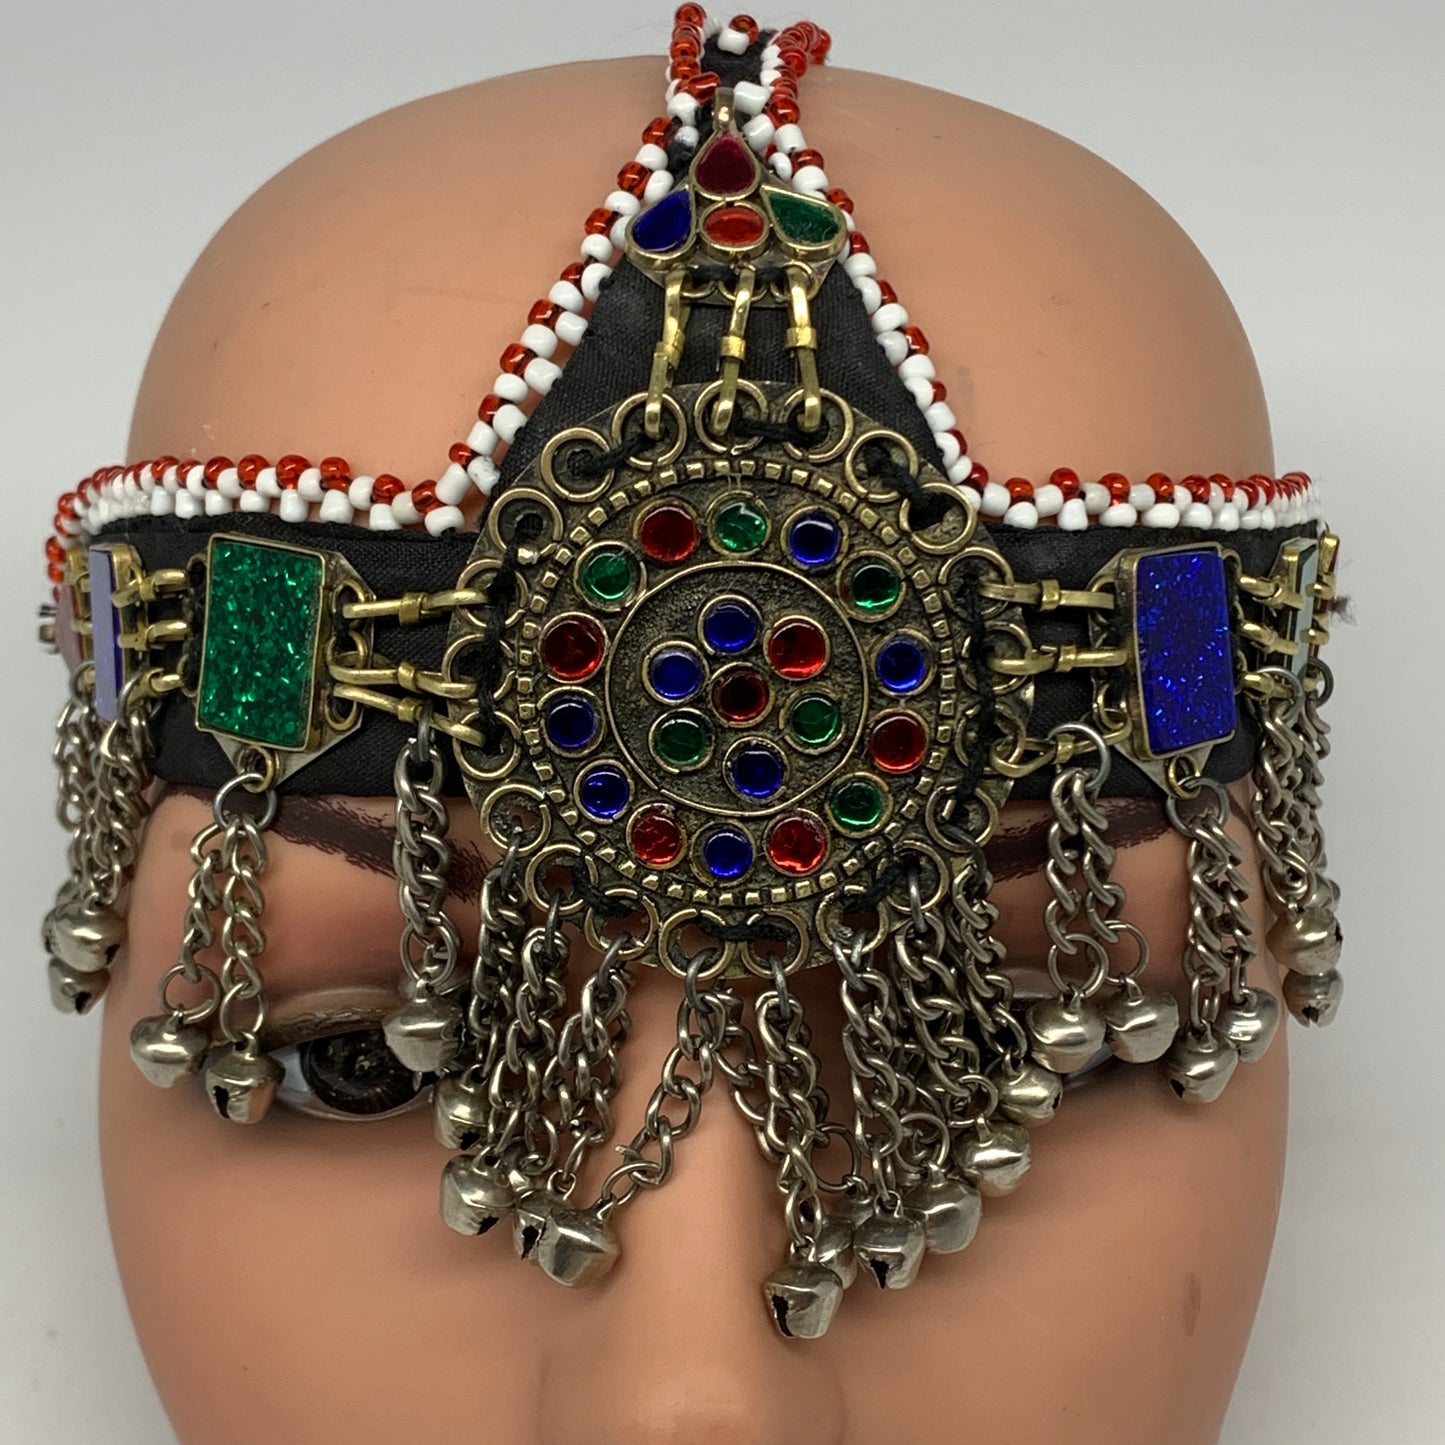 85g, Kuchi Headdress Headpiece Afghan Ethnic Tribal Jingle Bells @Afghanistan, B